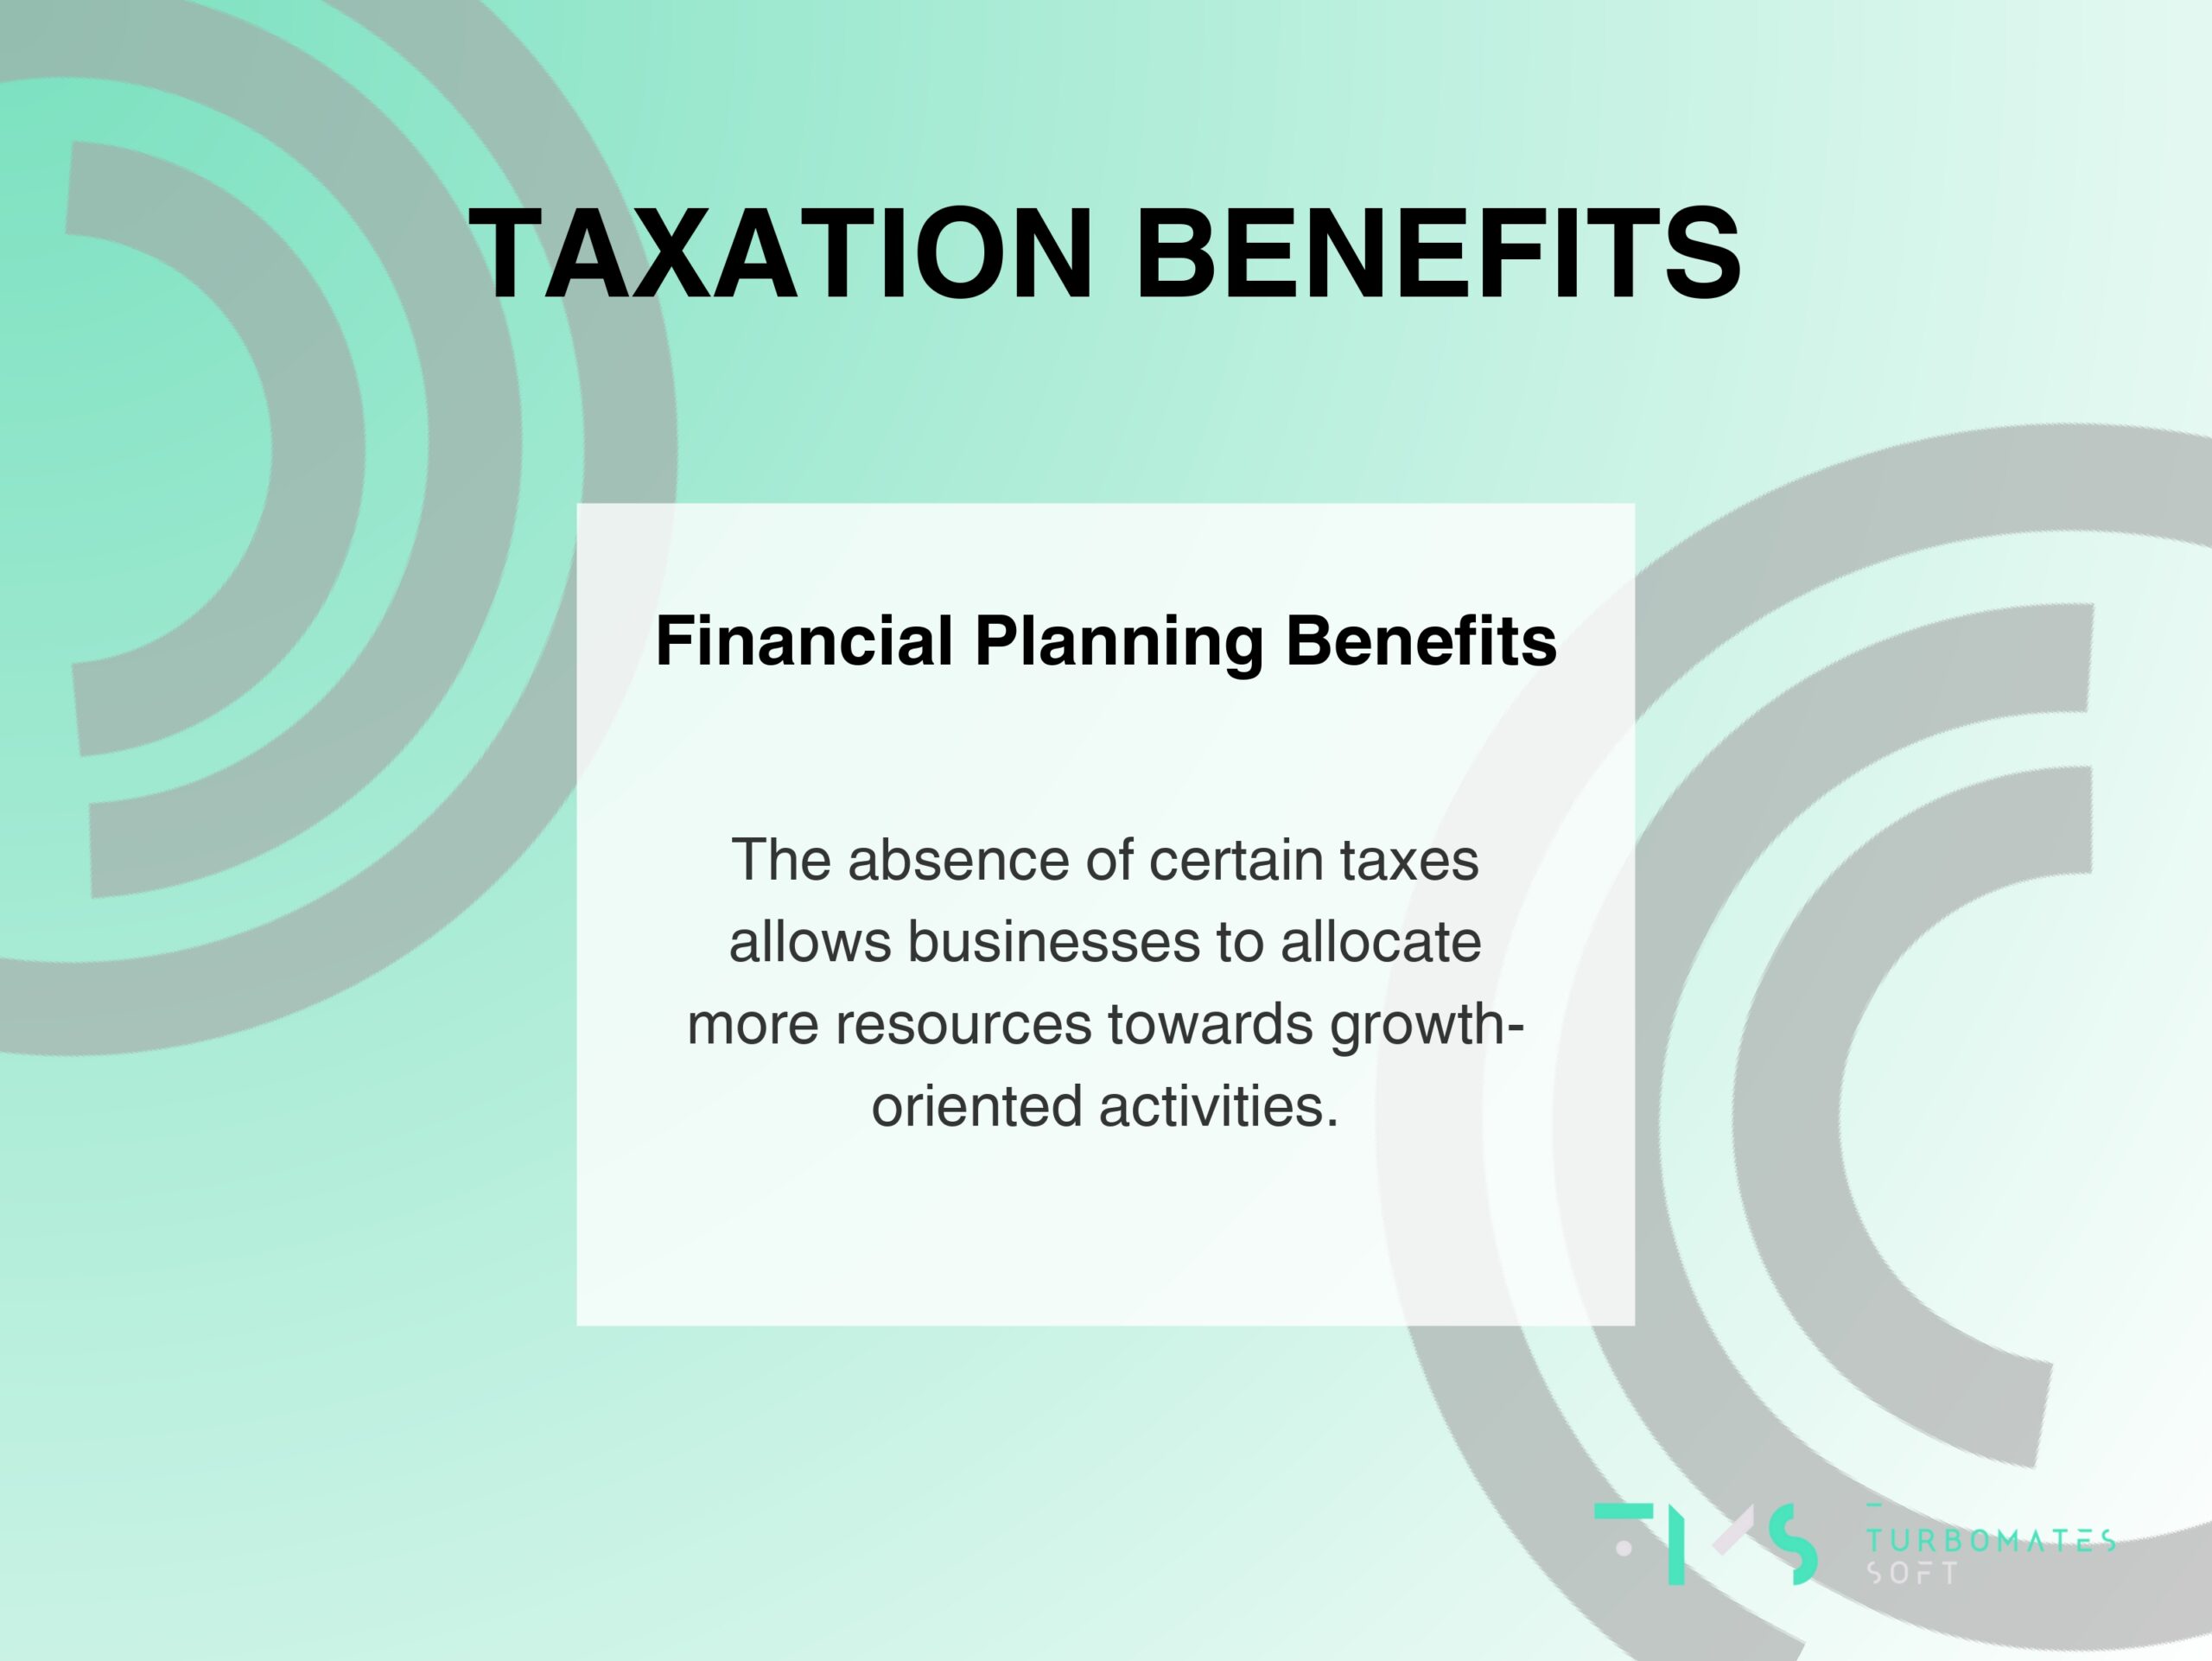 Taxation Benefits: